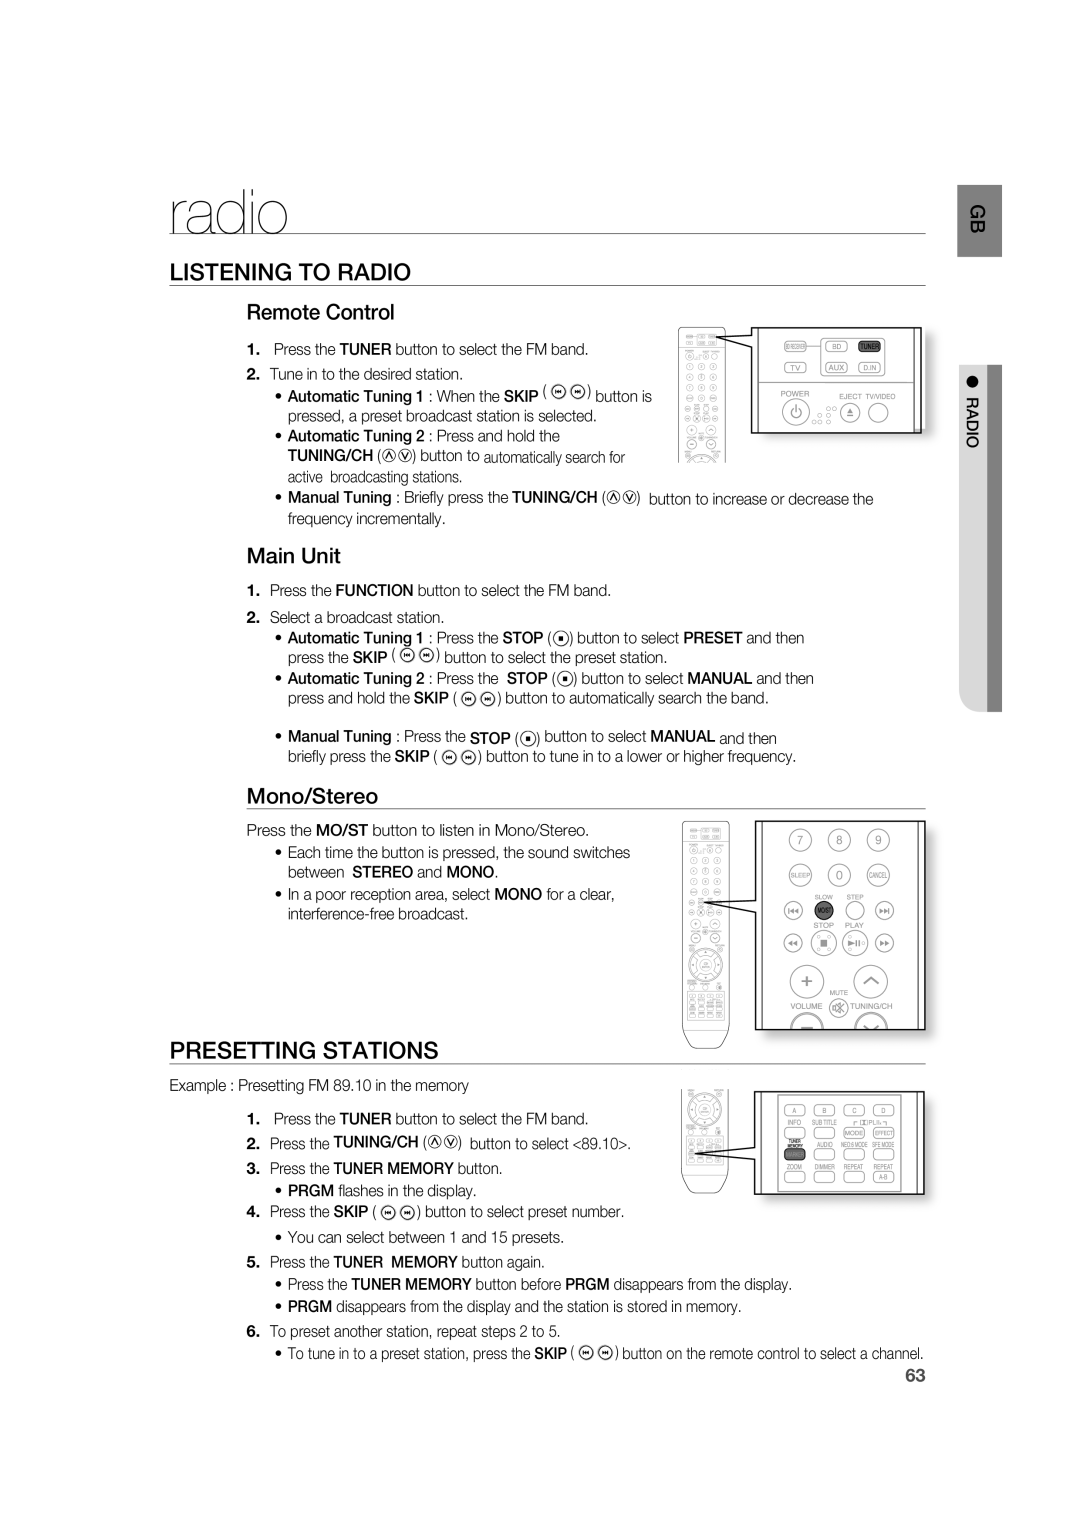 Samsung AH68-02019K manual radio, Listening To Radio, Presetting Stations, Remote Control, Main Unit, Mono/Stereo 